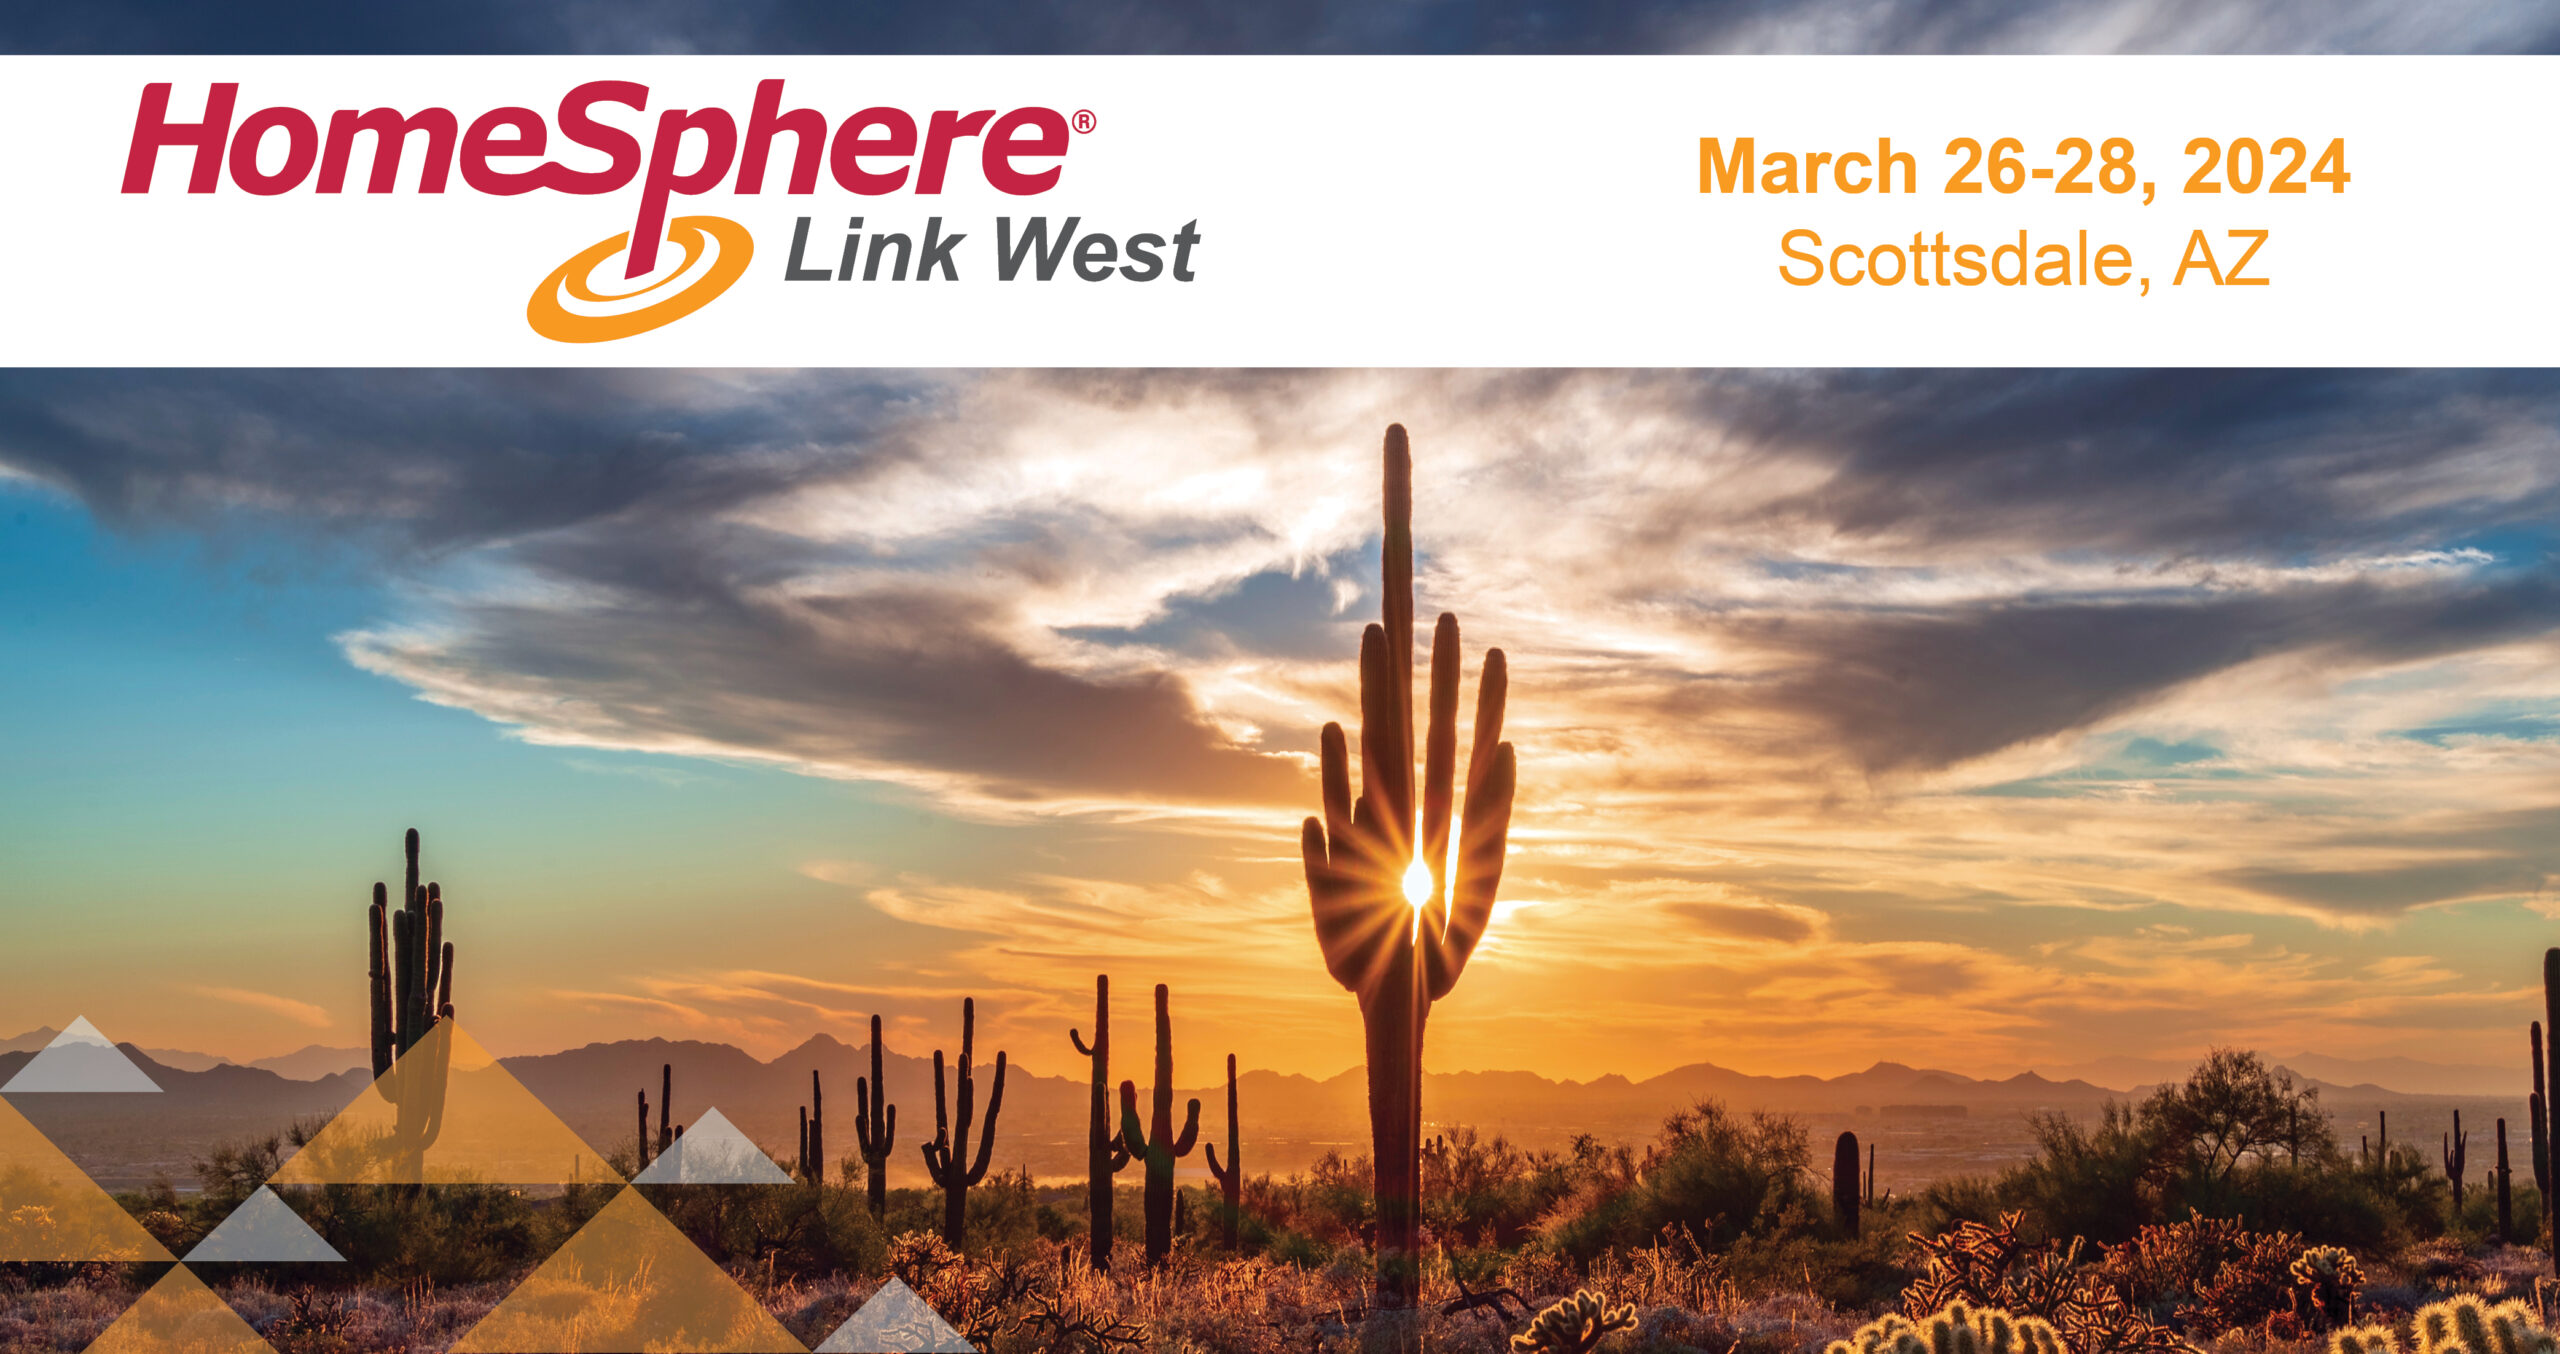 HomeSphere Link West event in Scottsdale, AZ